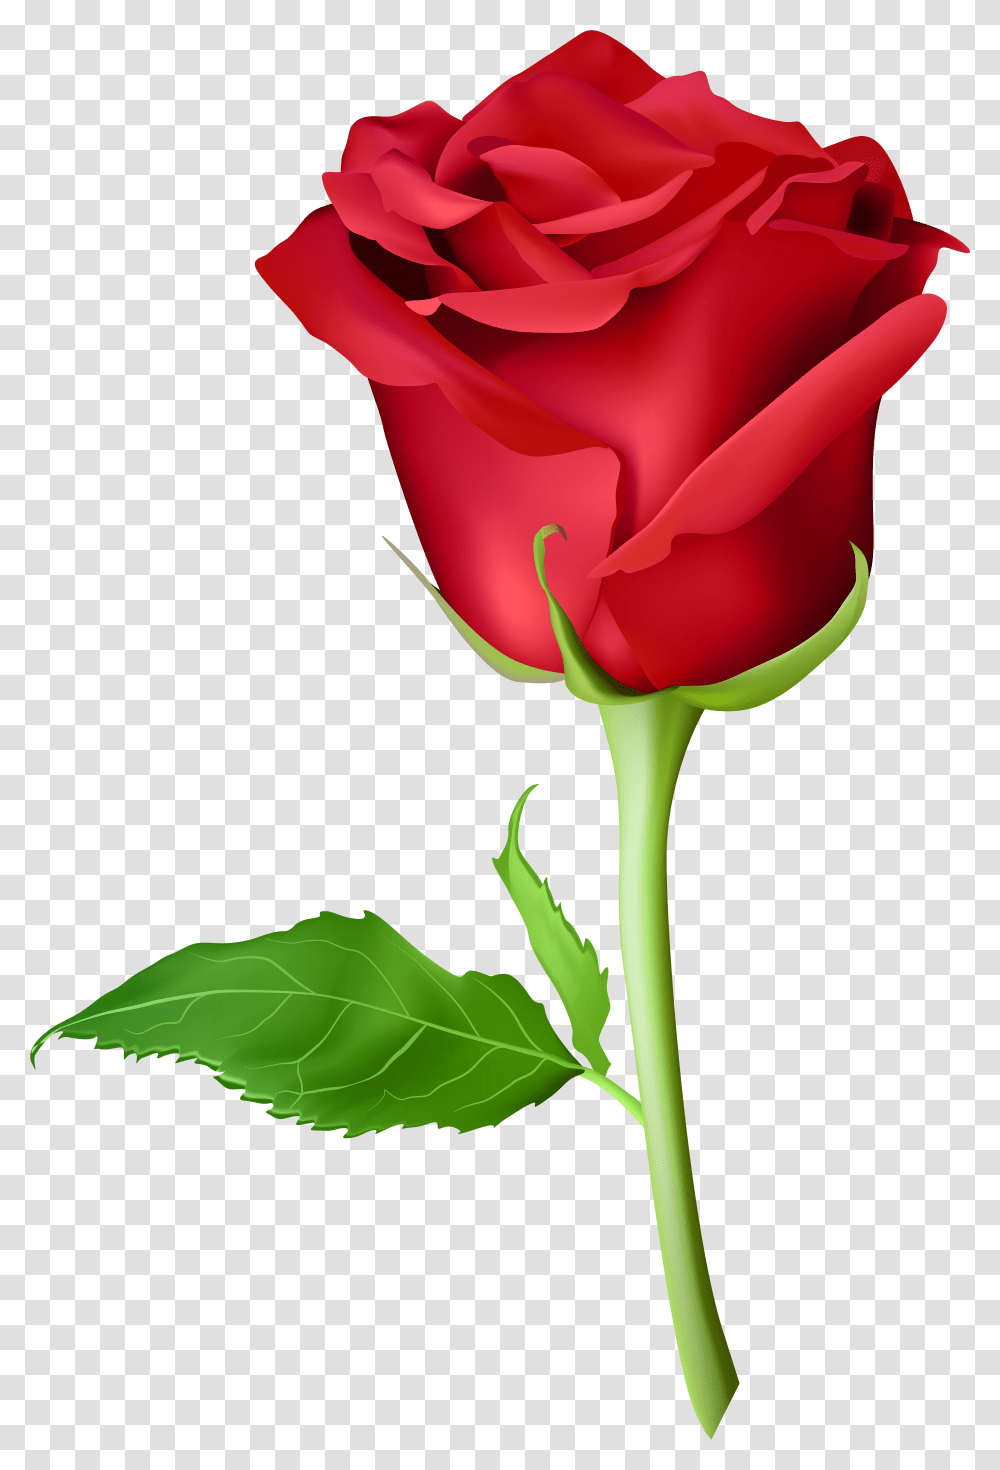 Rose Flower Images Free Download Blue Roses Images Hd, Plant, Blossom Transparent Png